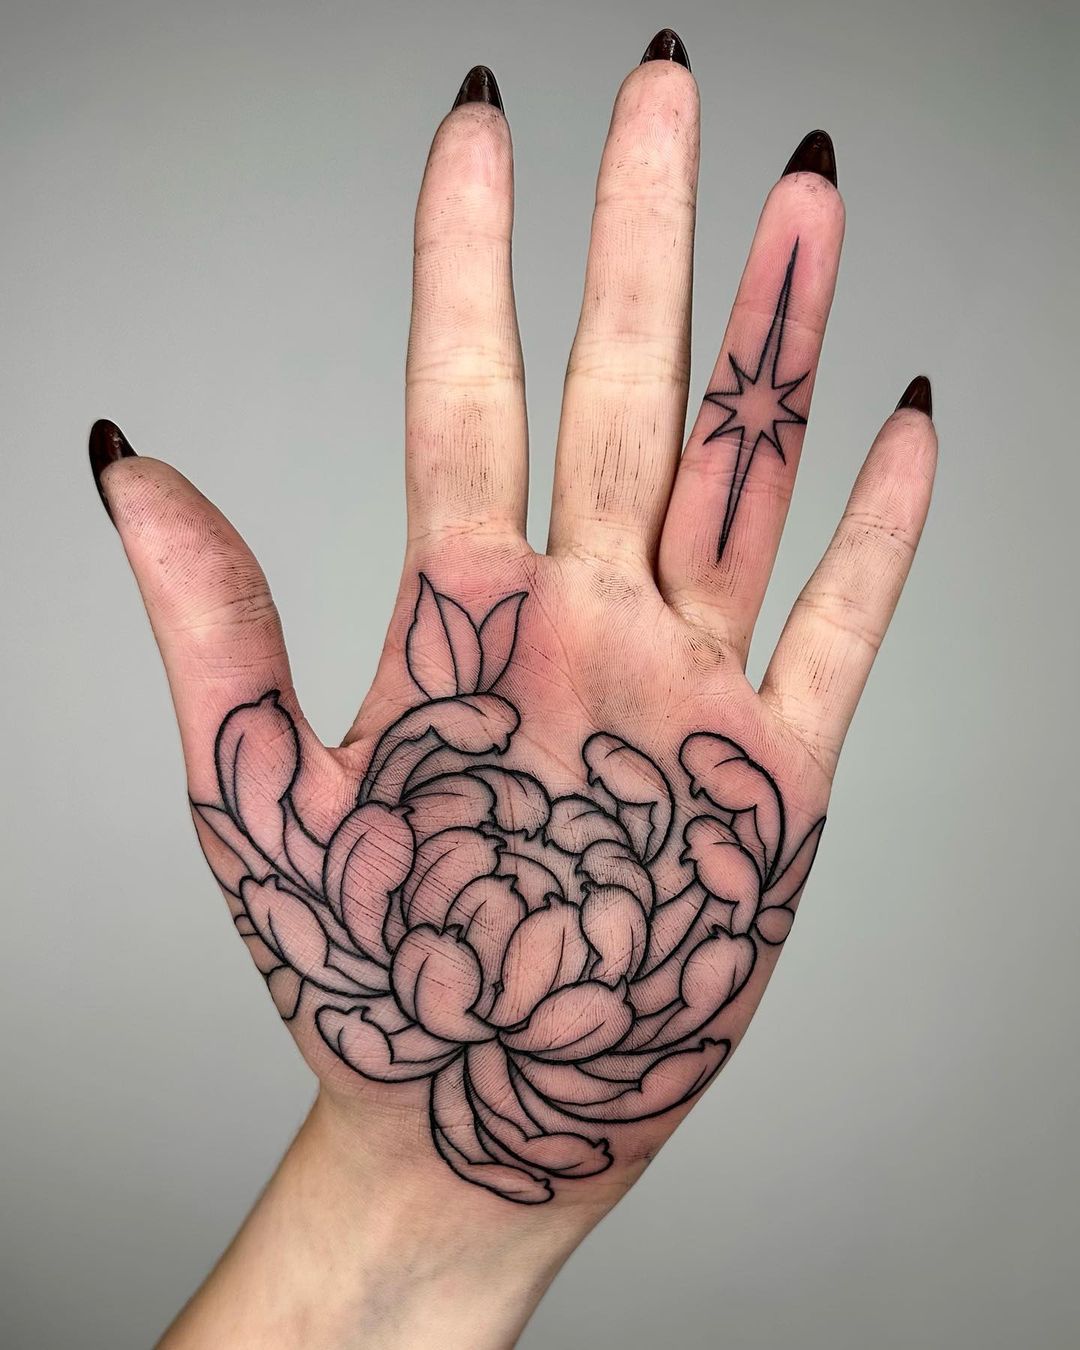 Violet and Chrysanthemum Tattoo | Art